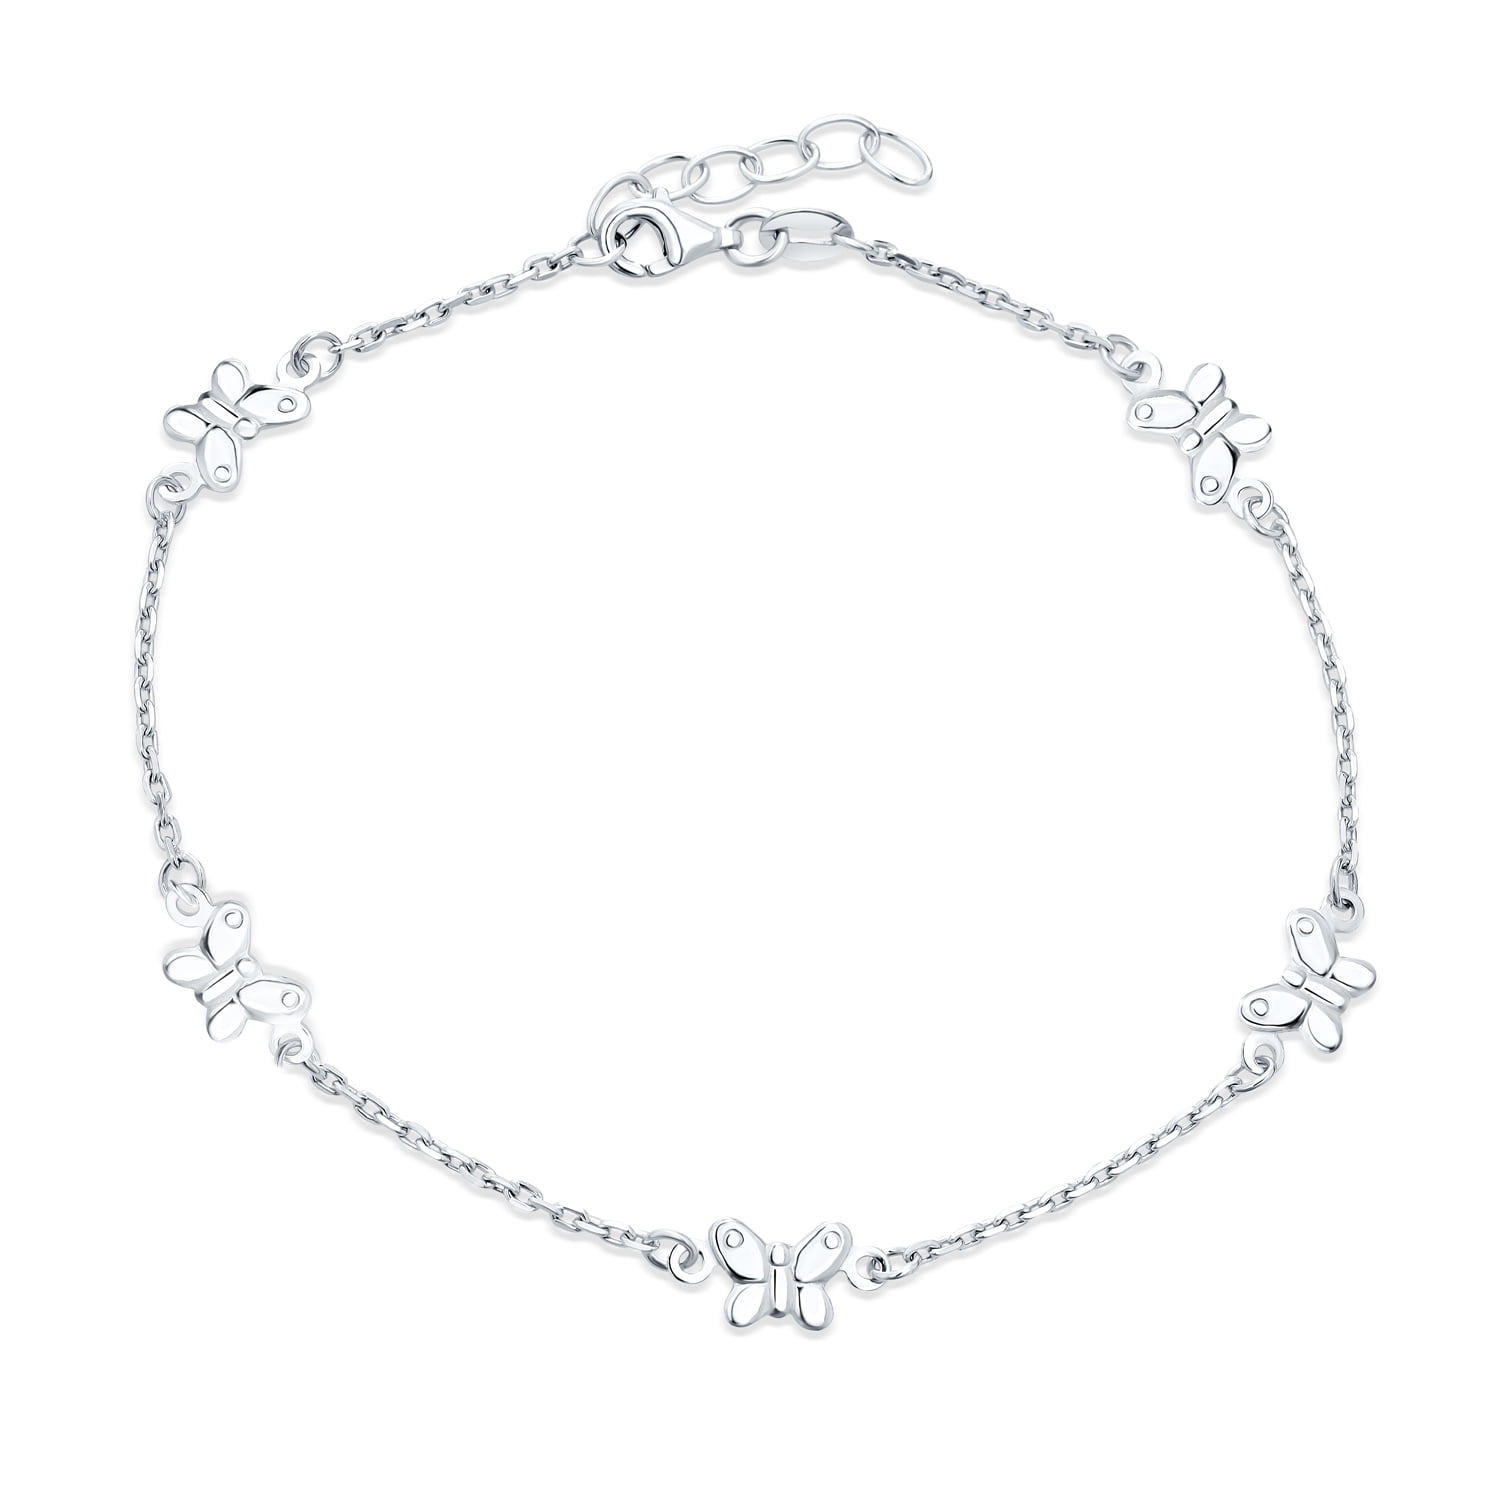 Sterling Silver Anklet Bracelet with Charm 